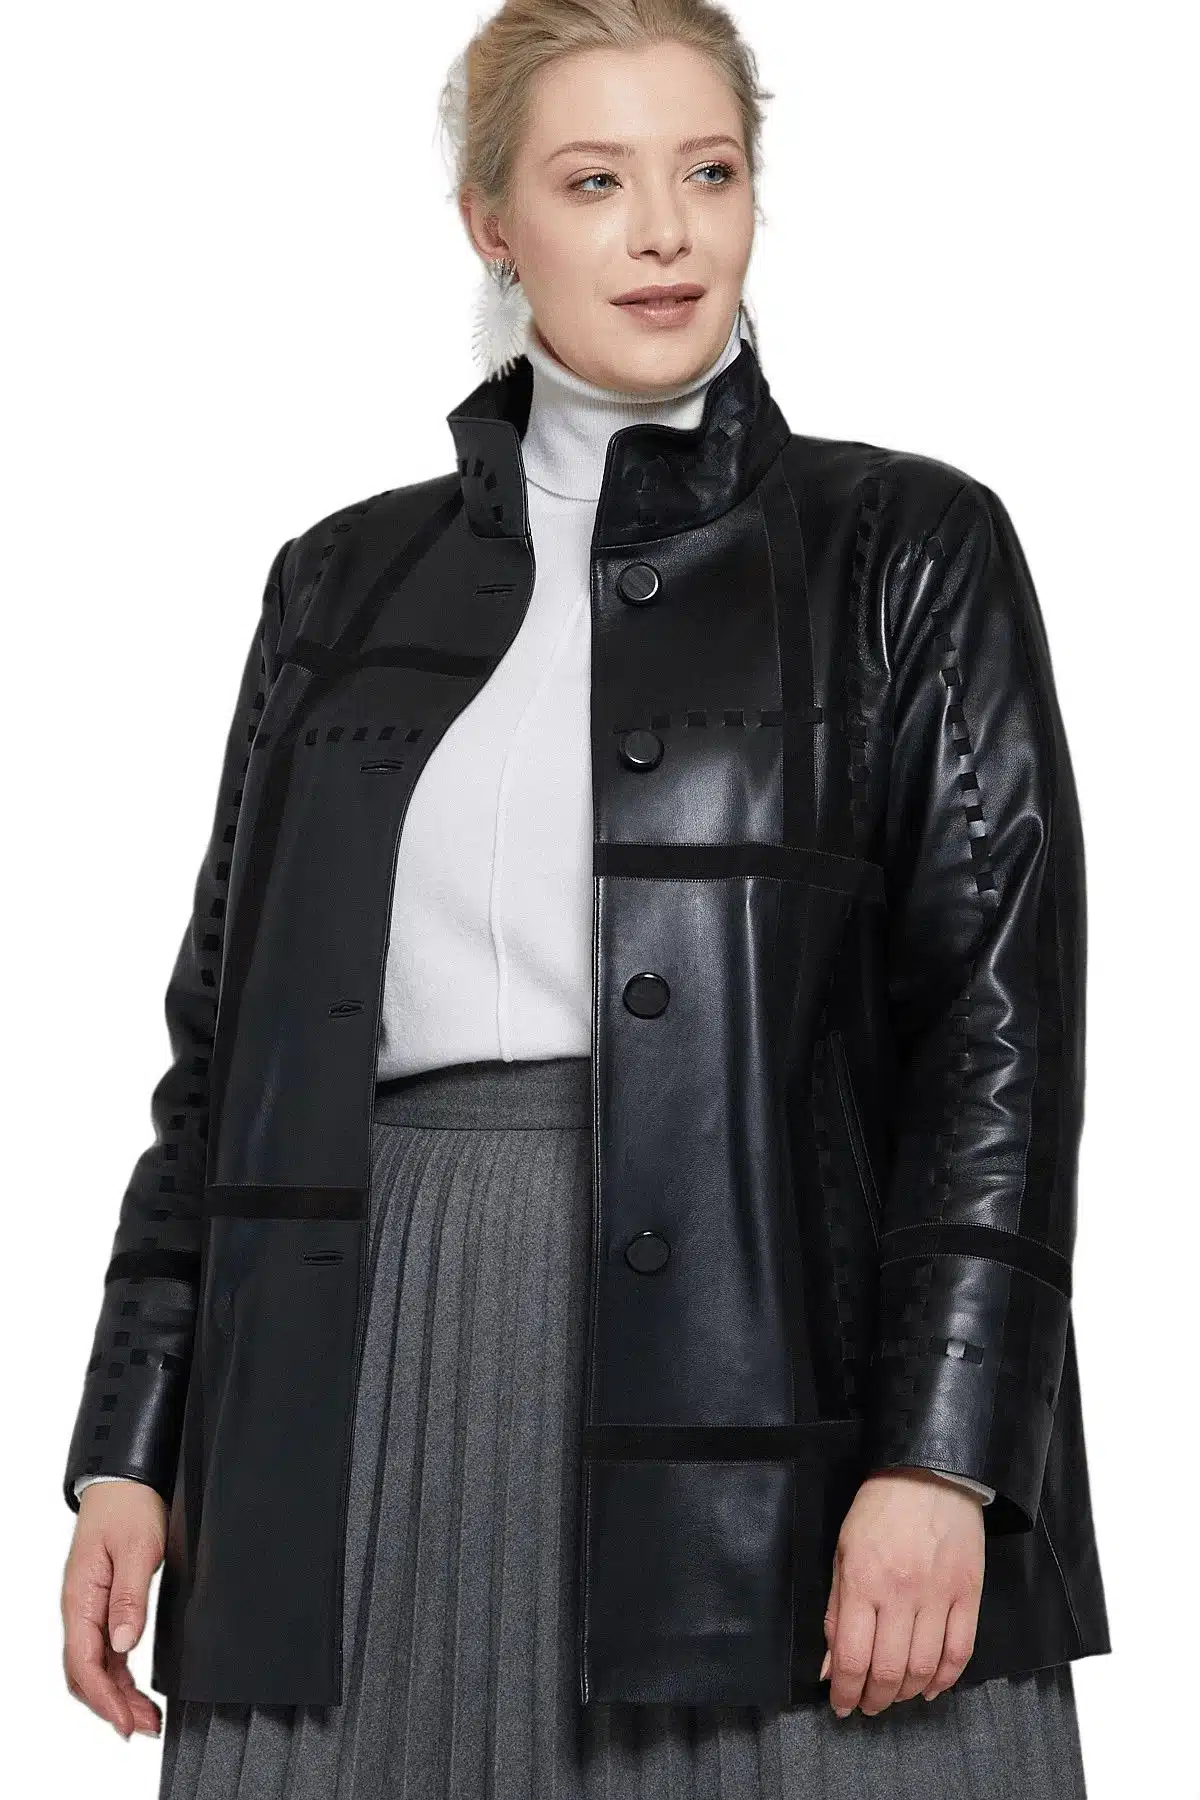 Dazzling Black Women’s Genuine Leather Jacket (4)_result